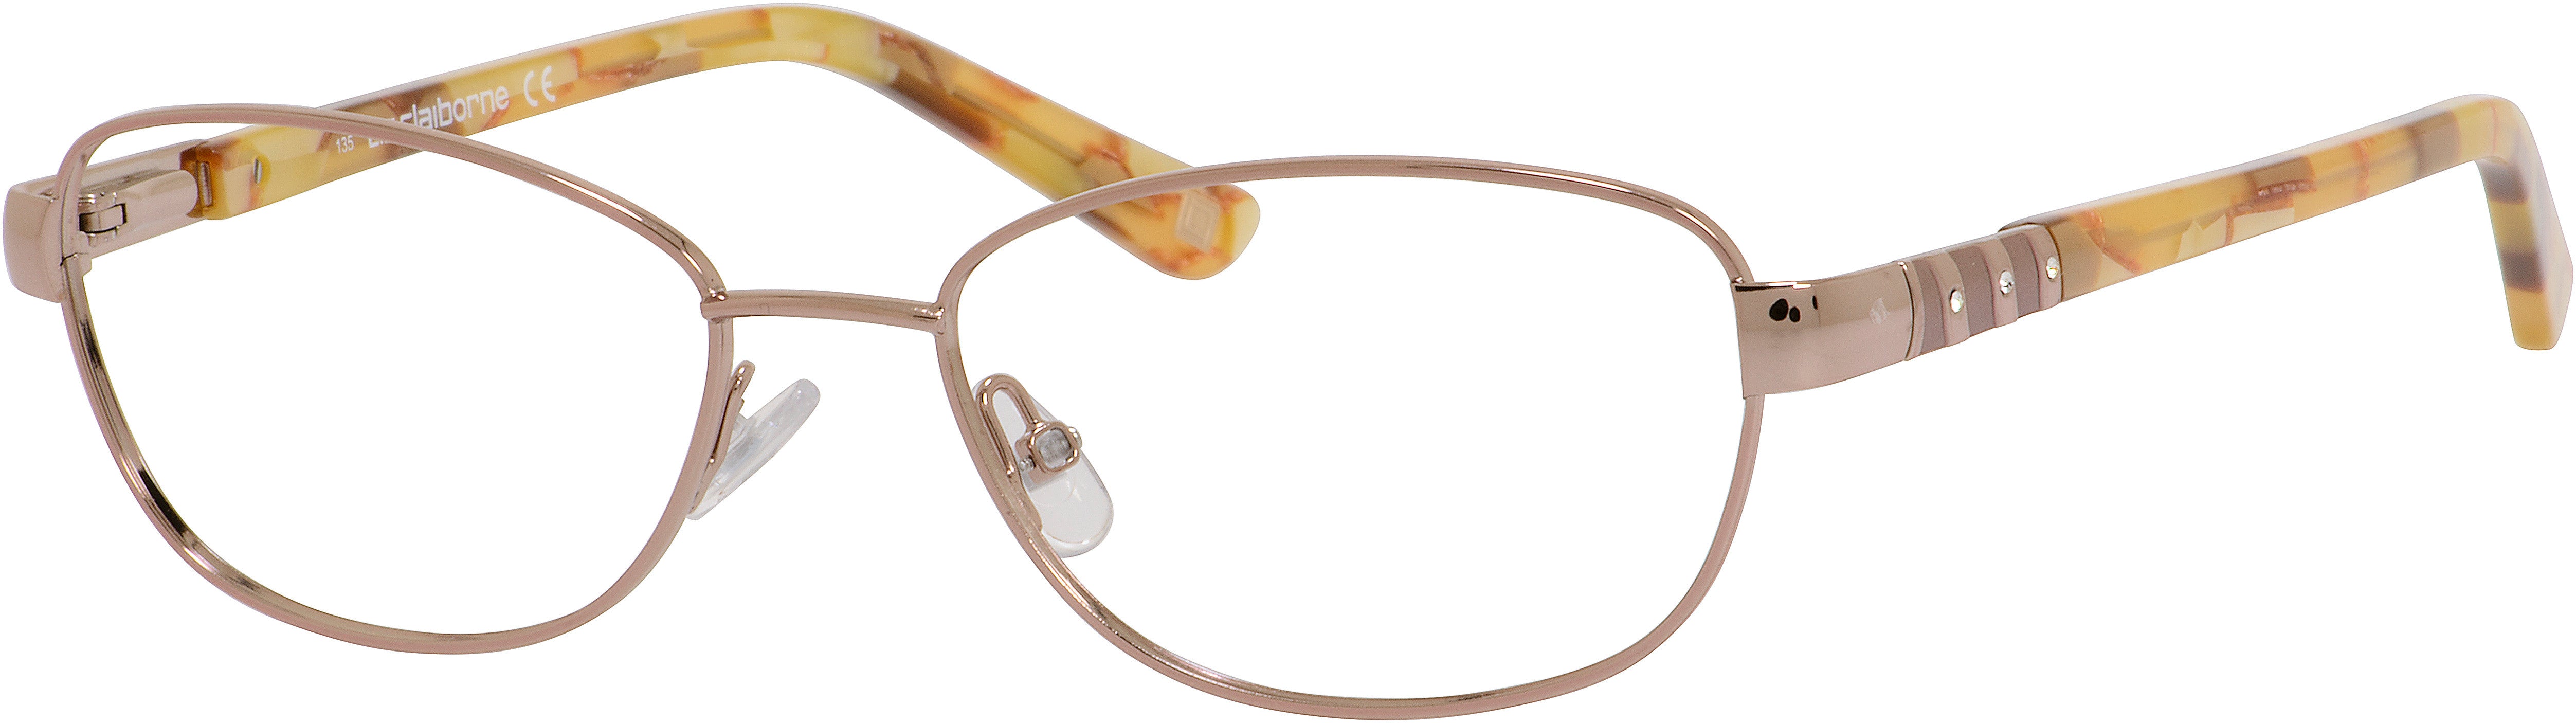  Liz Claiborne 613 Oval Eyeglasses 01N5-01N5  Coral (00 Demo Lens)